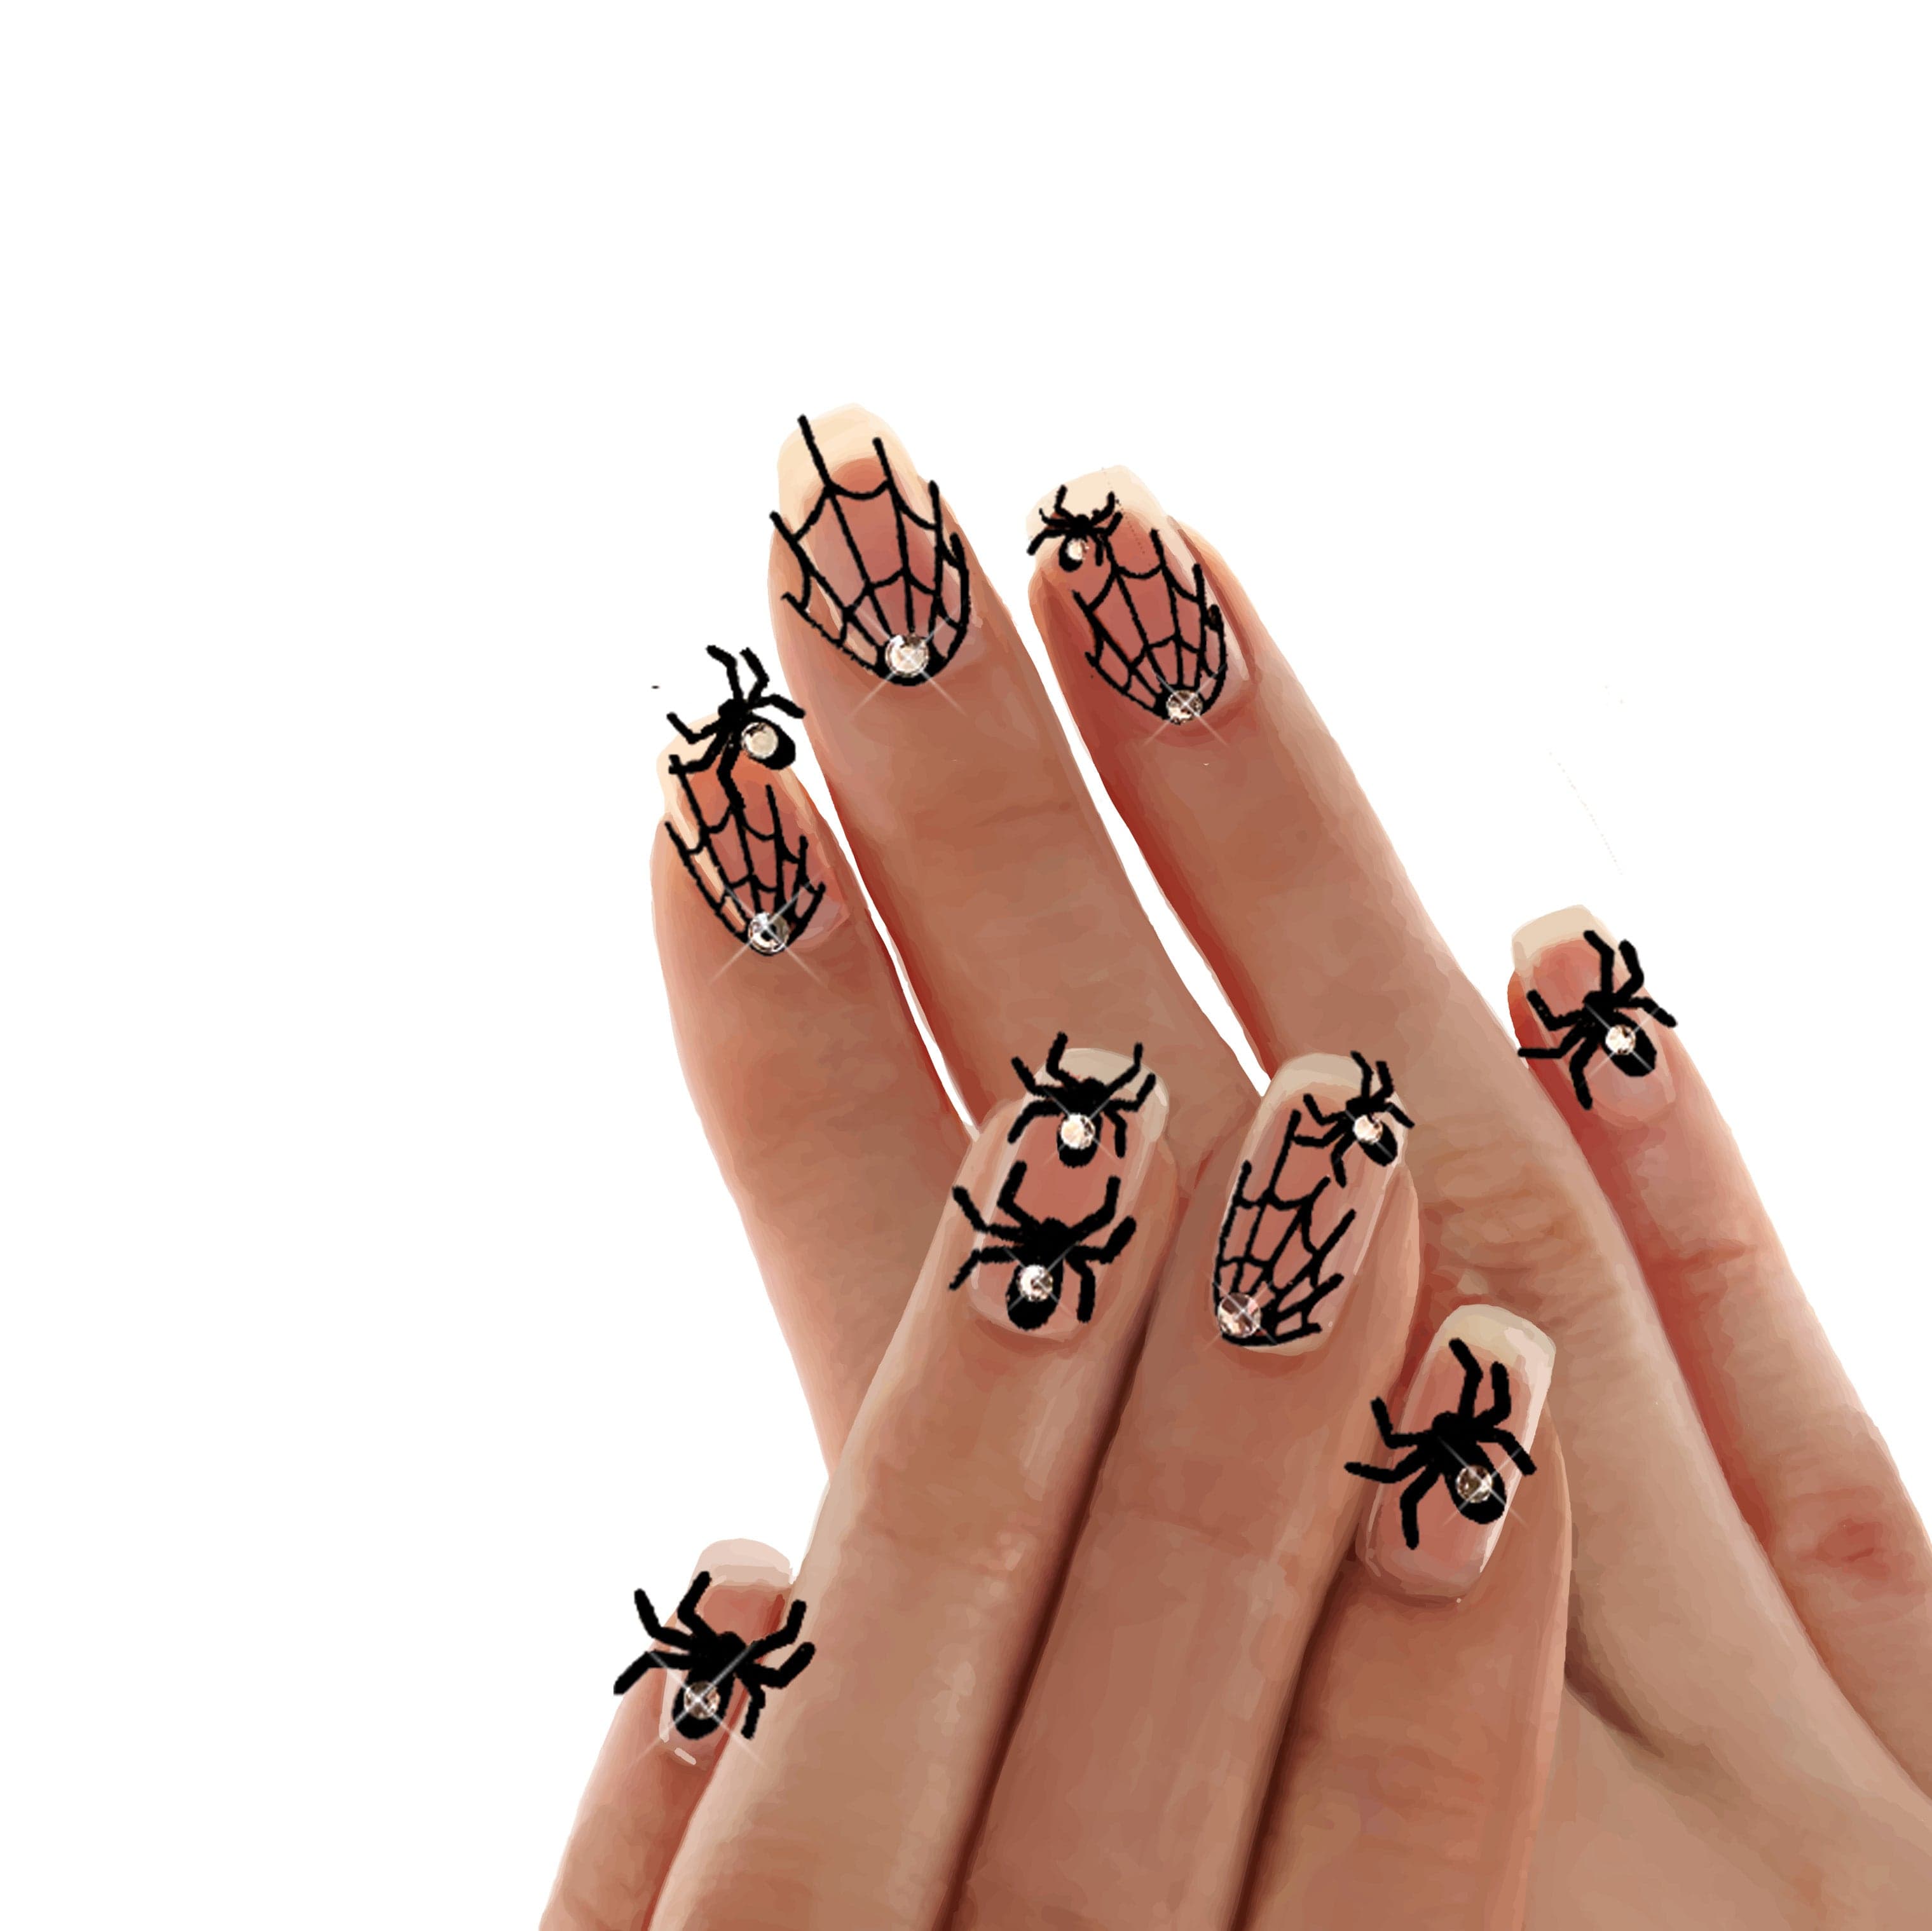 Gel spider web manicure | Gel nails, Manicure, Nail art hacks